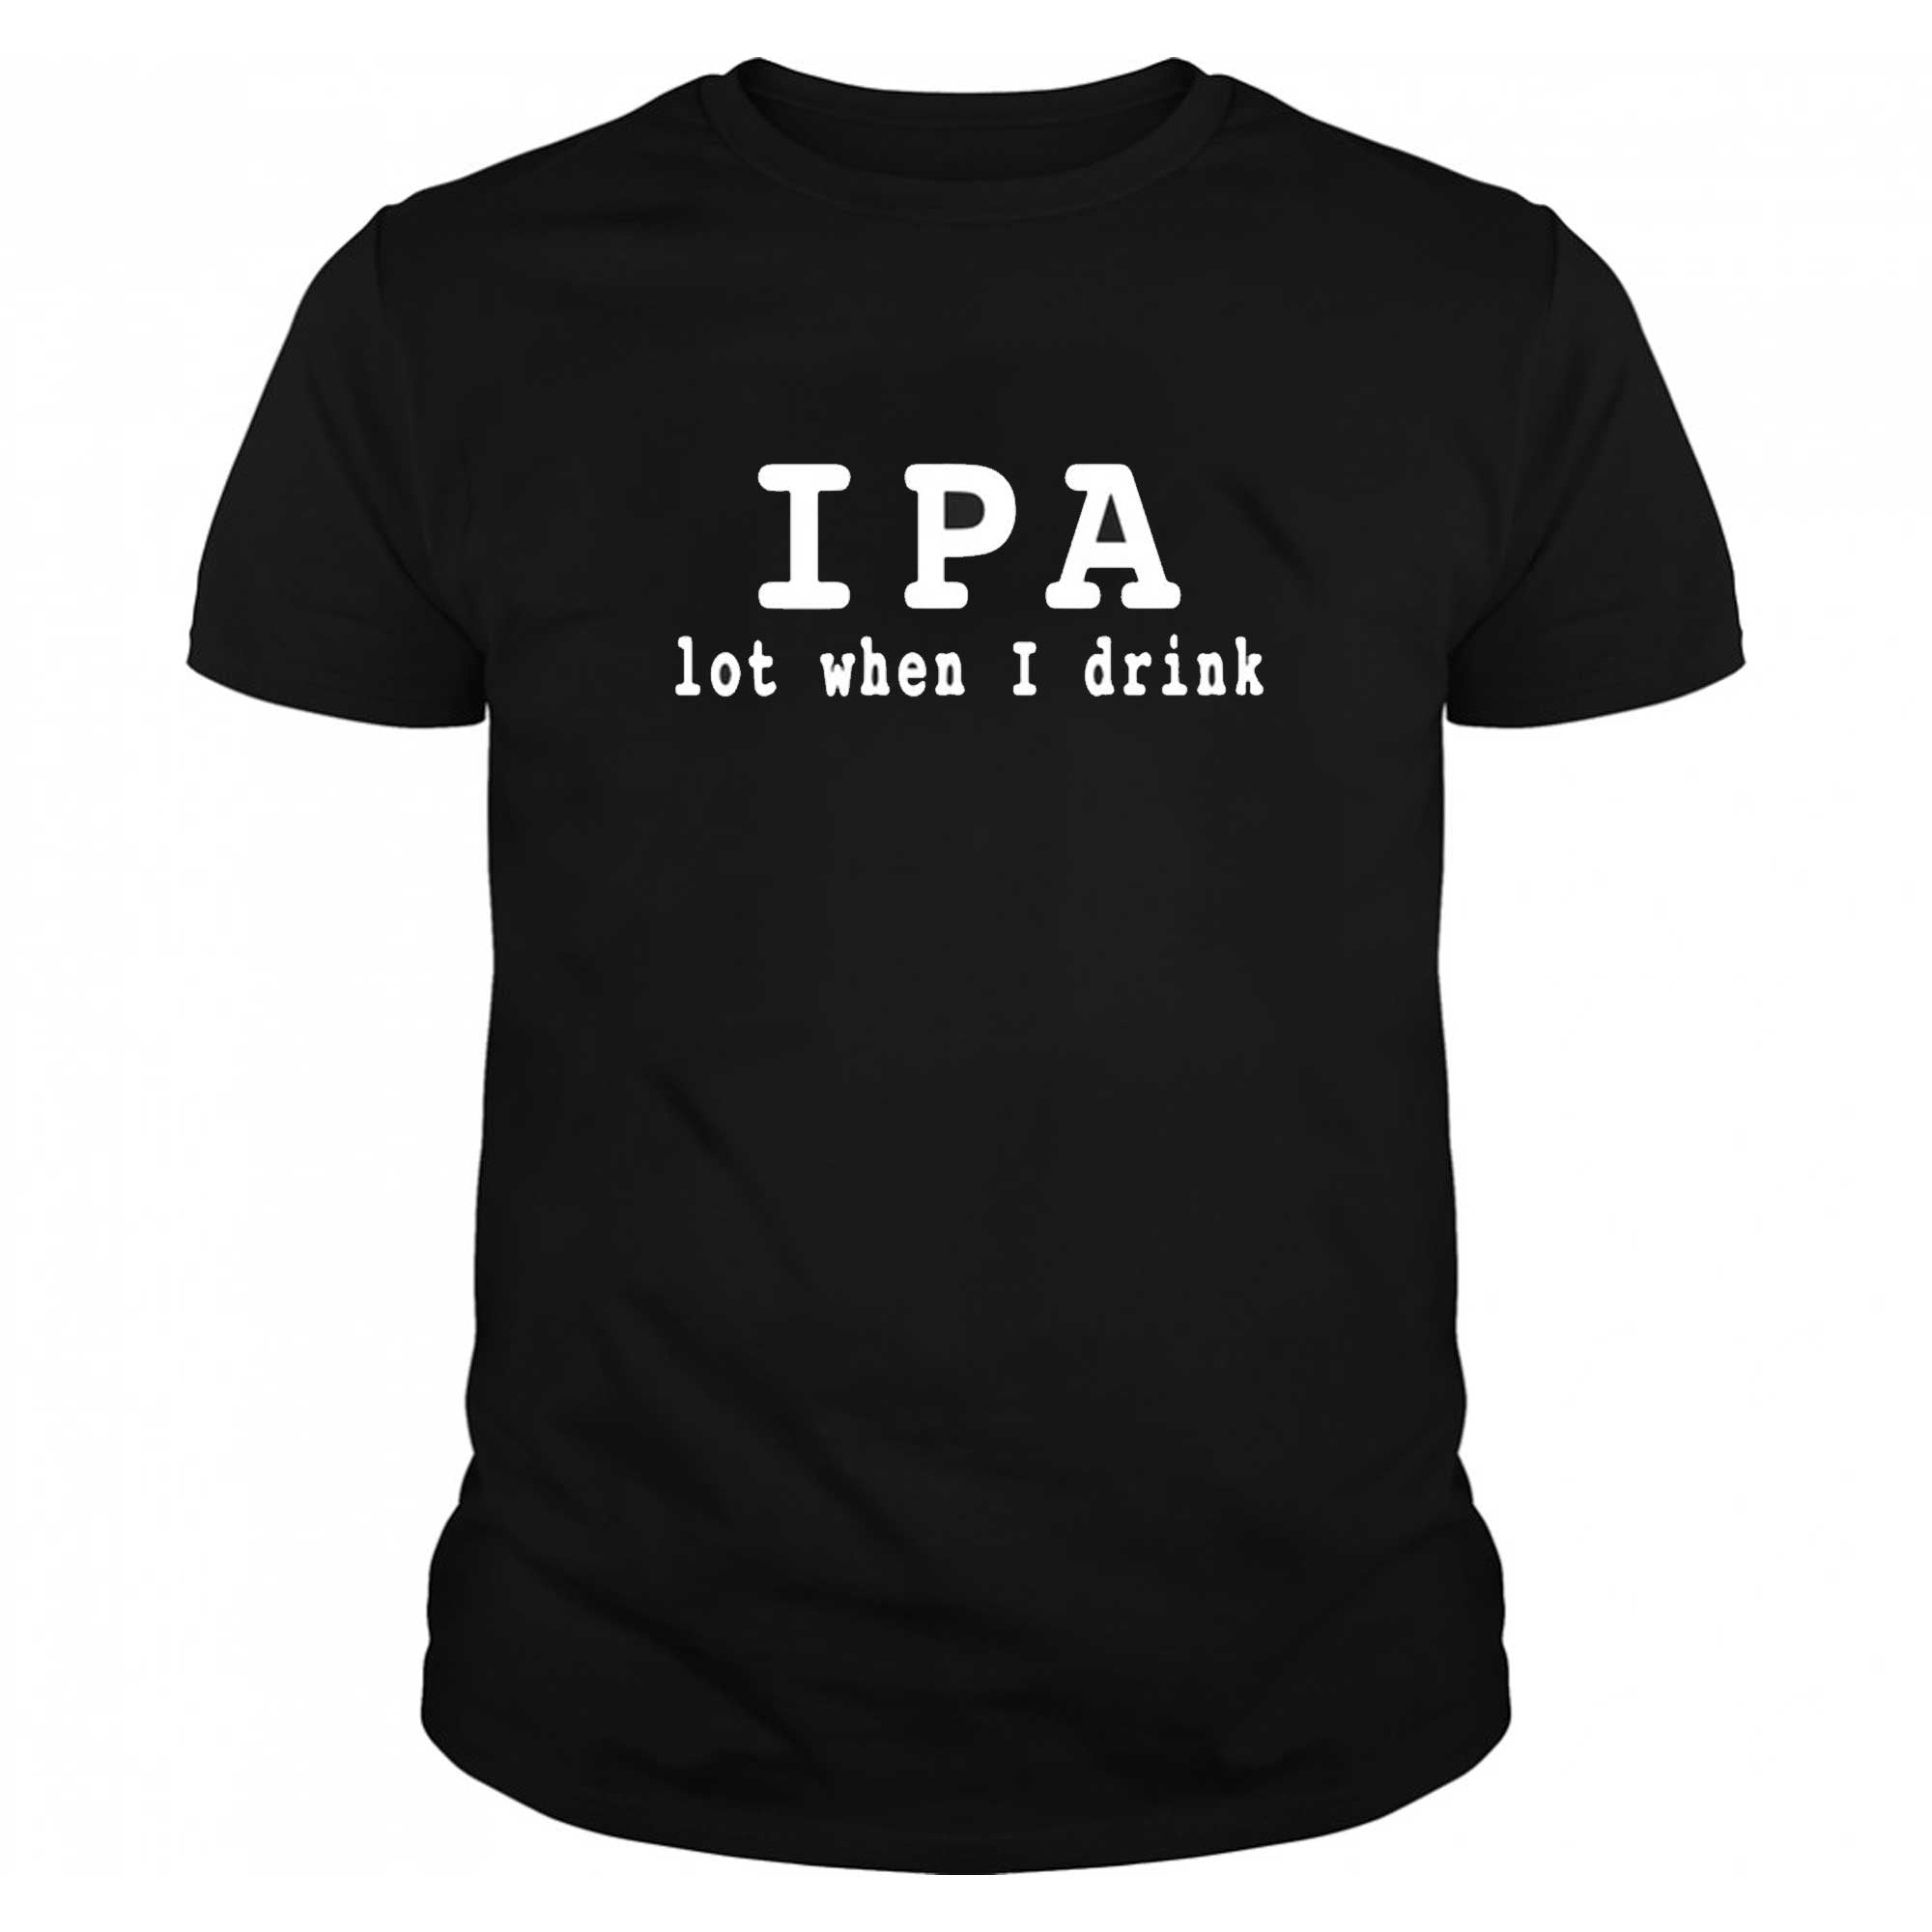 Skitongift-Beer-Lover-Gift-For-Beer-Lover-Ipa-Lot-When-I-Drink-Ipa-Shirt-Microbrew-Shirt-Pale-Ale-Shirt-Homebrew-Gift-Draft-Funny-Shirts-Long-Sleeve-Tee